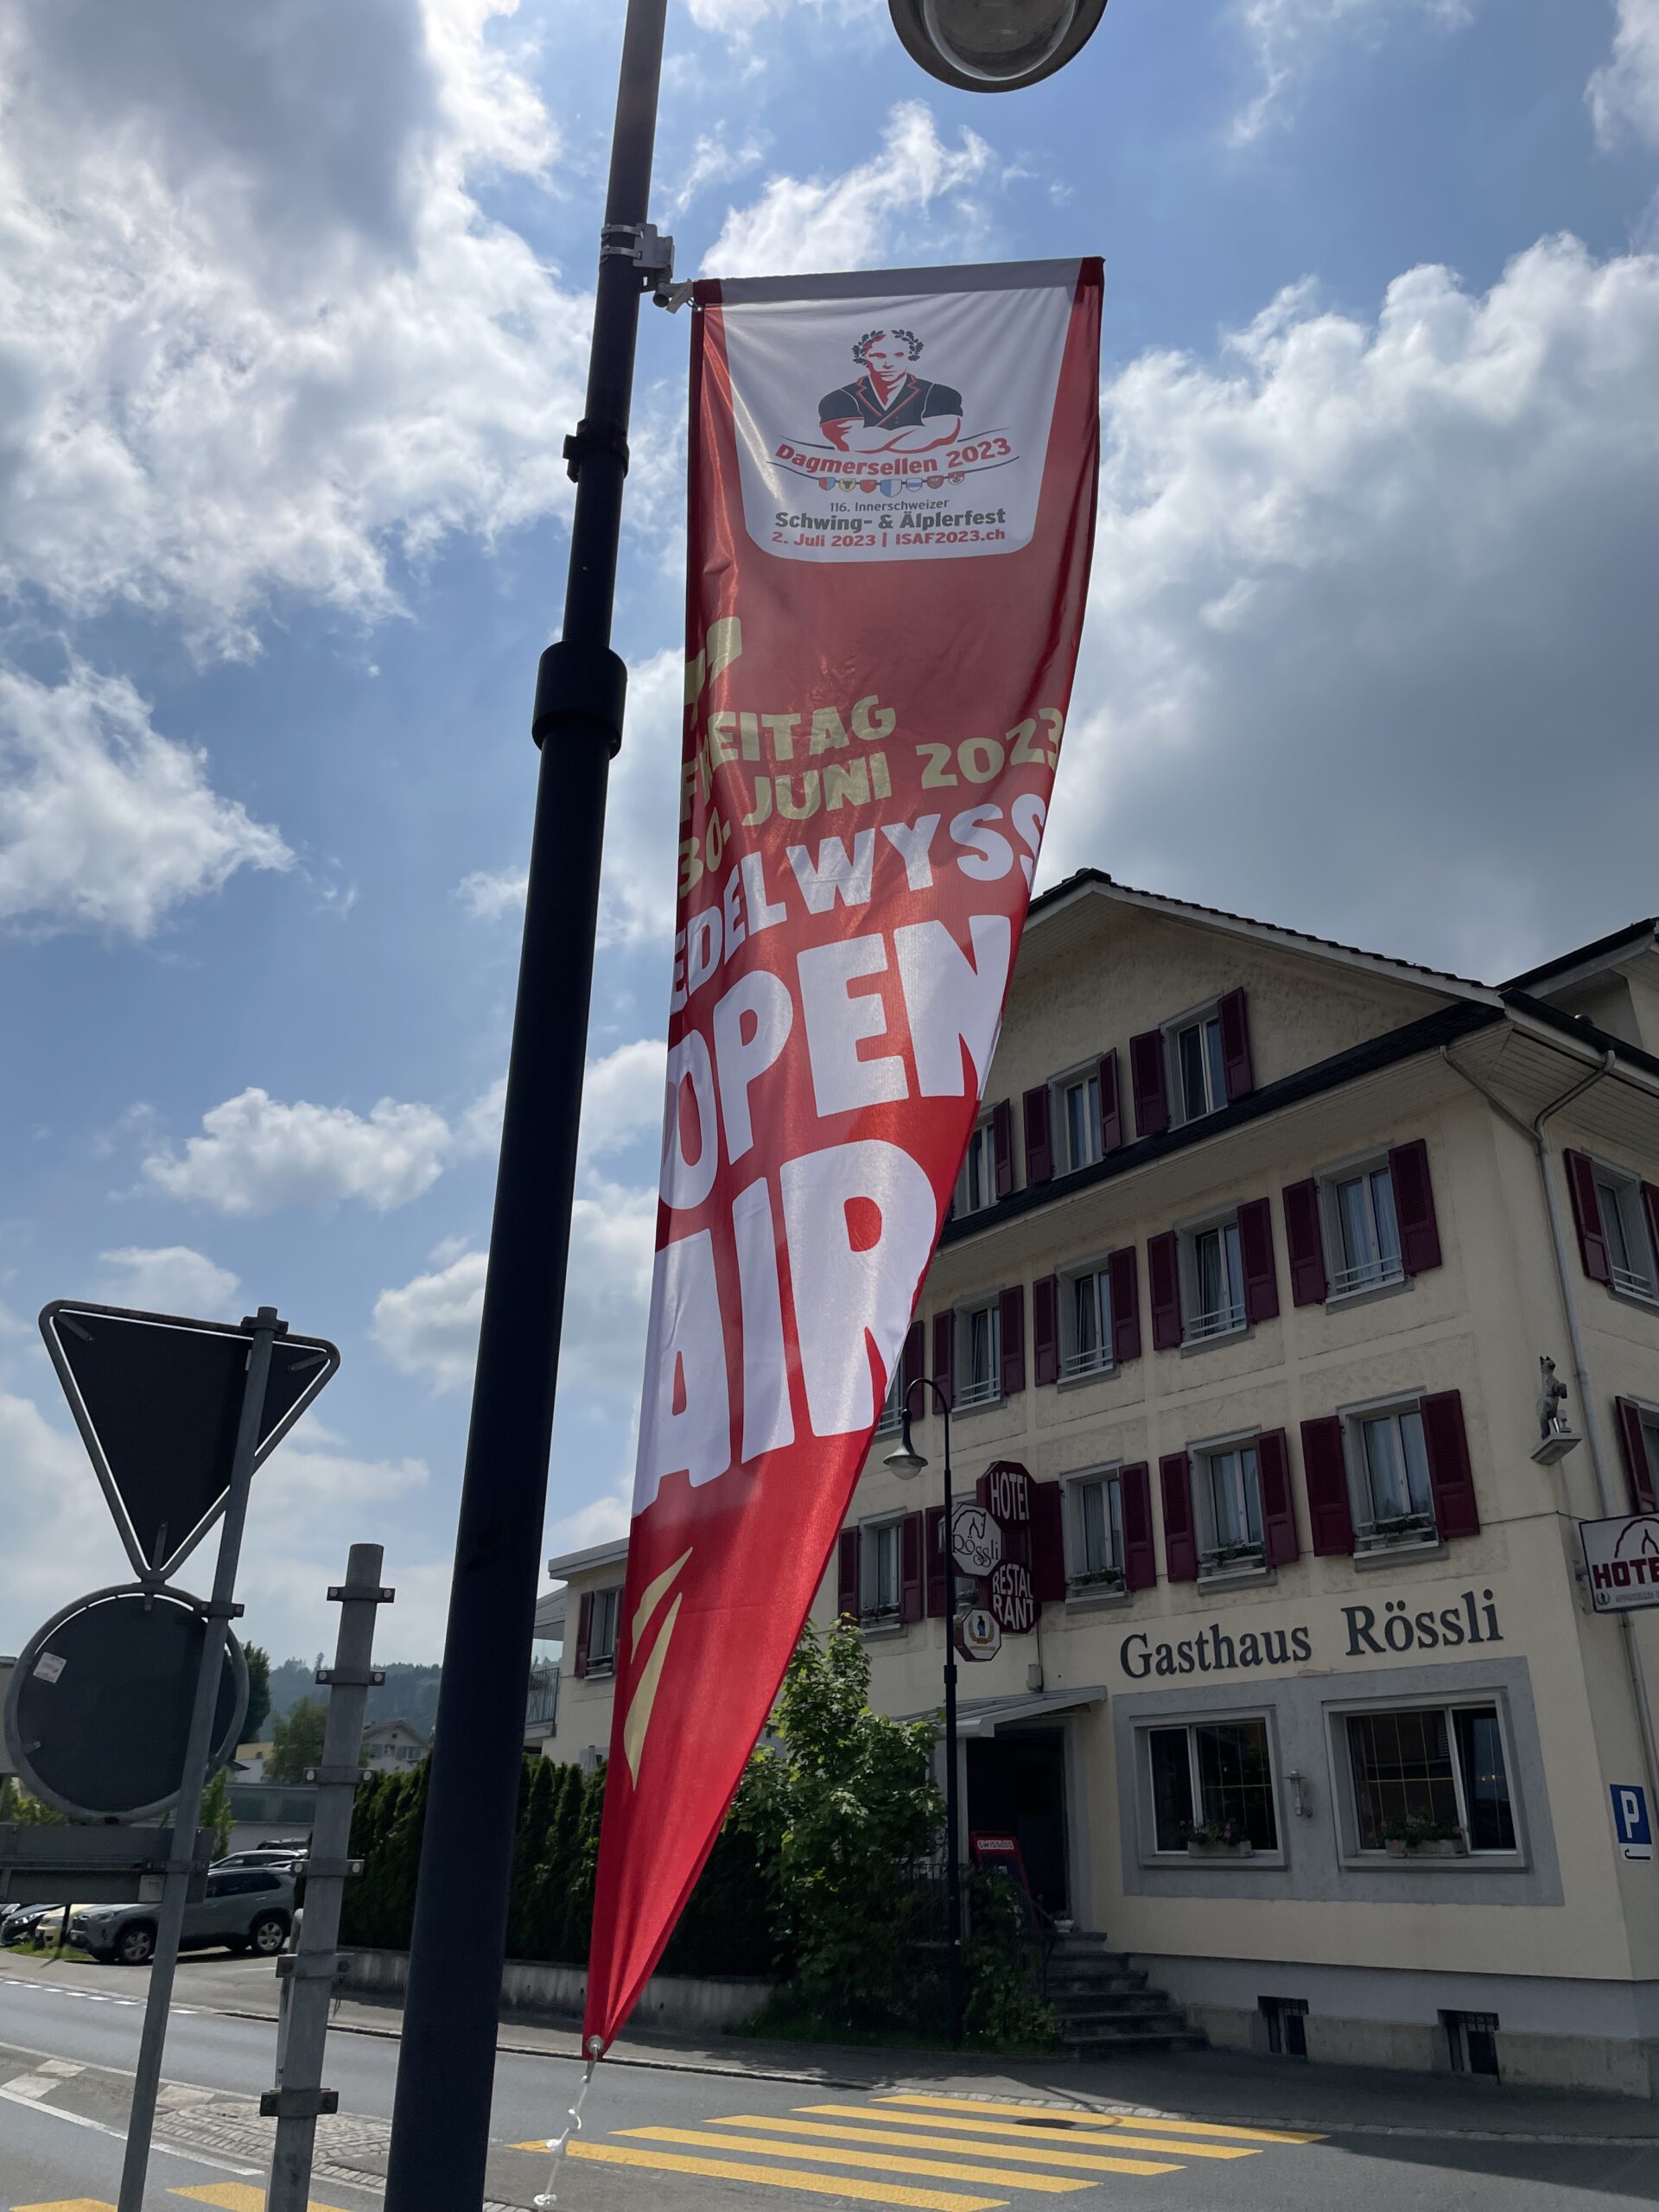 Fahne Kanton Aargau - Aargauer Fahne kaufen